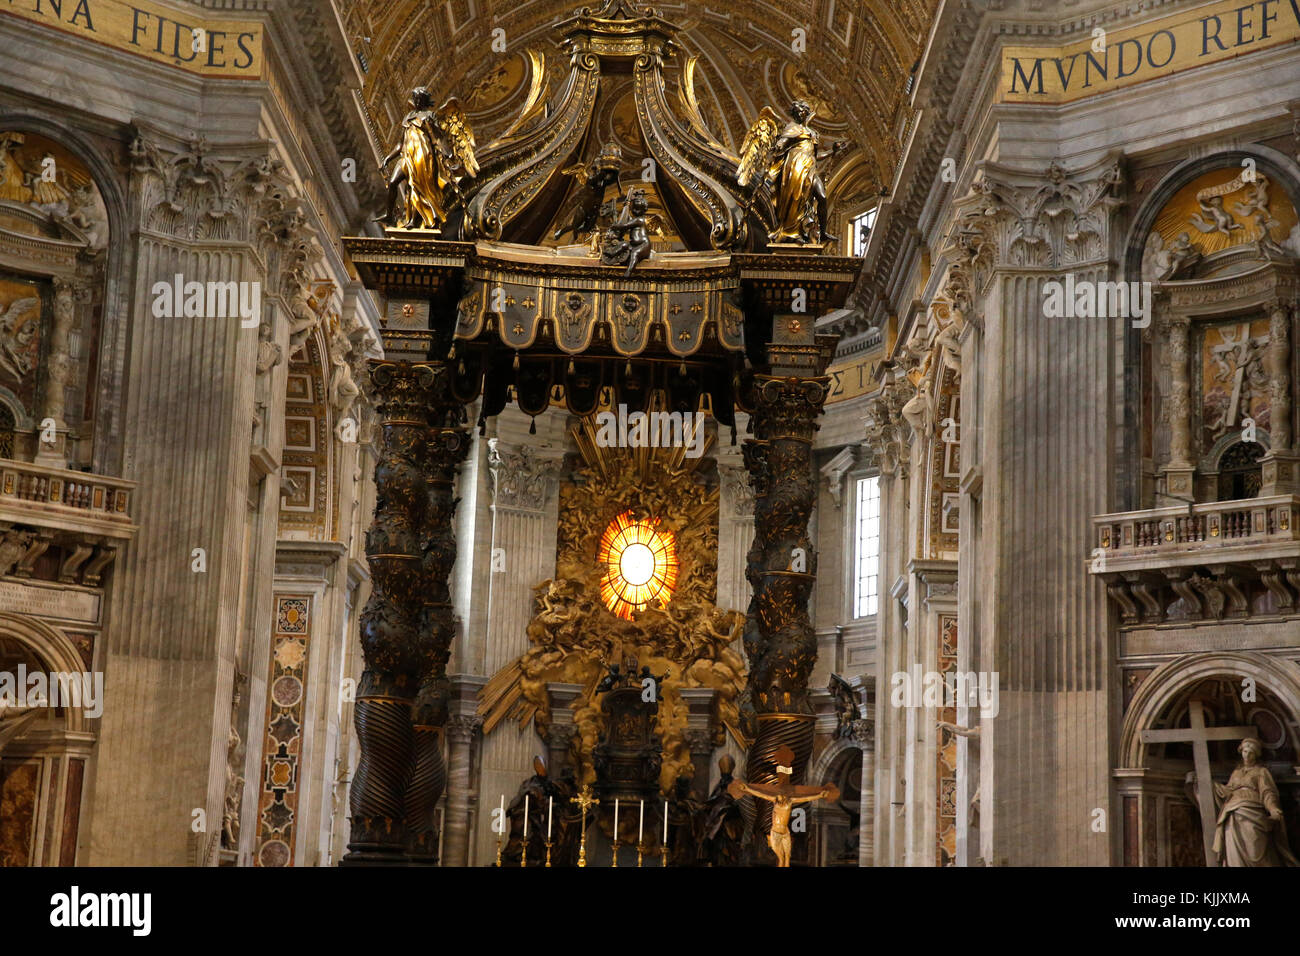 St Peter's basilica chancel, Rome Italy. Stock Photo